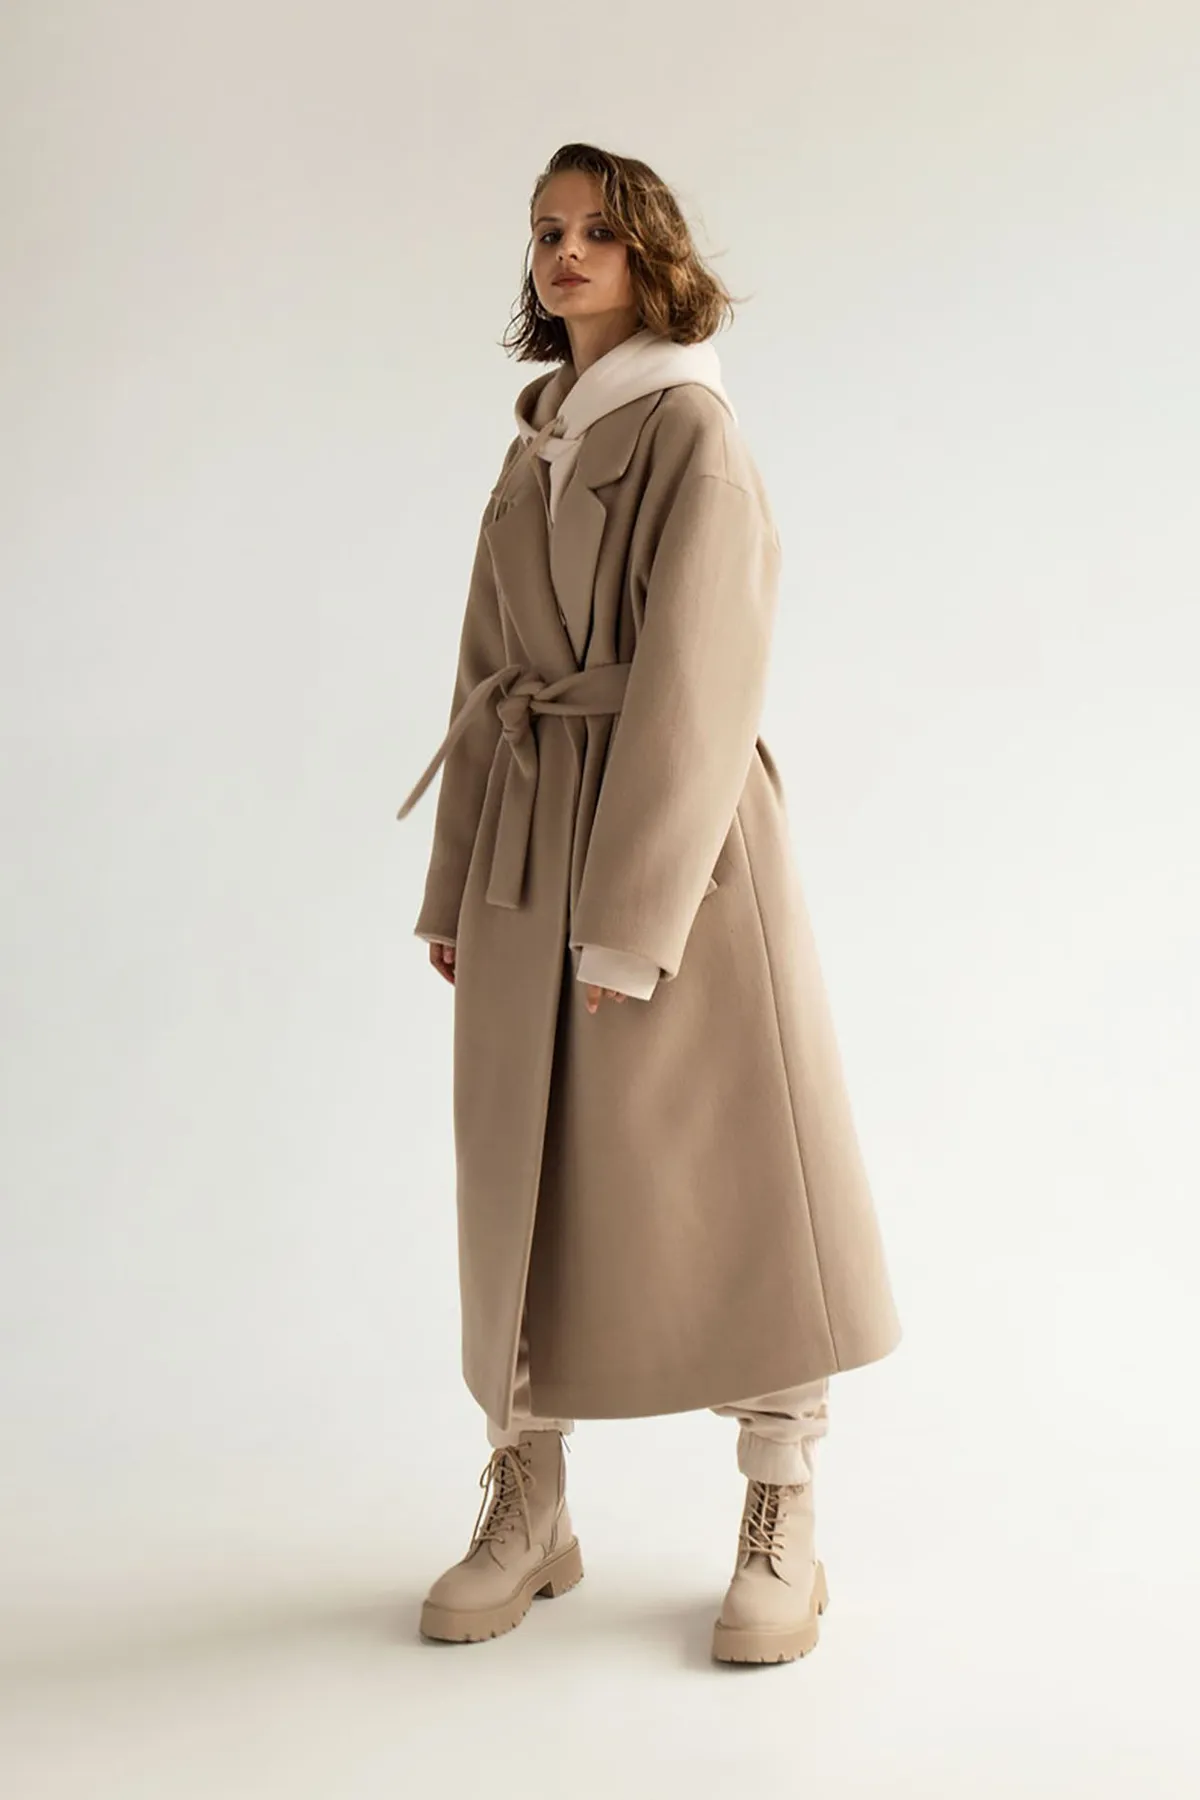 Coat sewing pattern – Martina coat